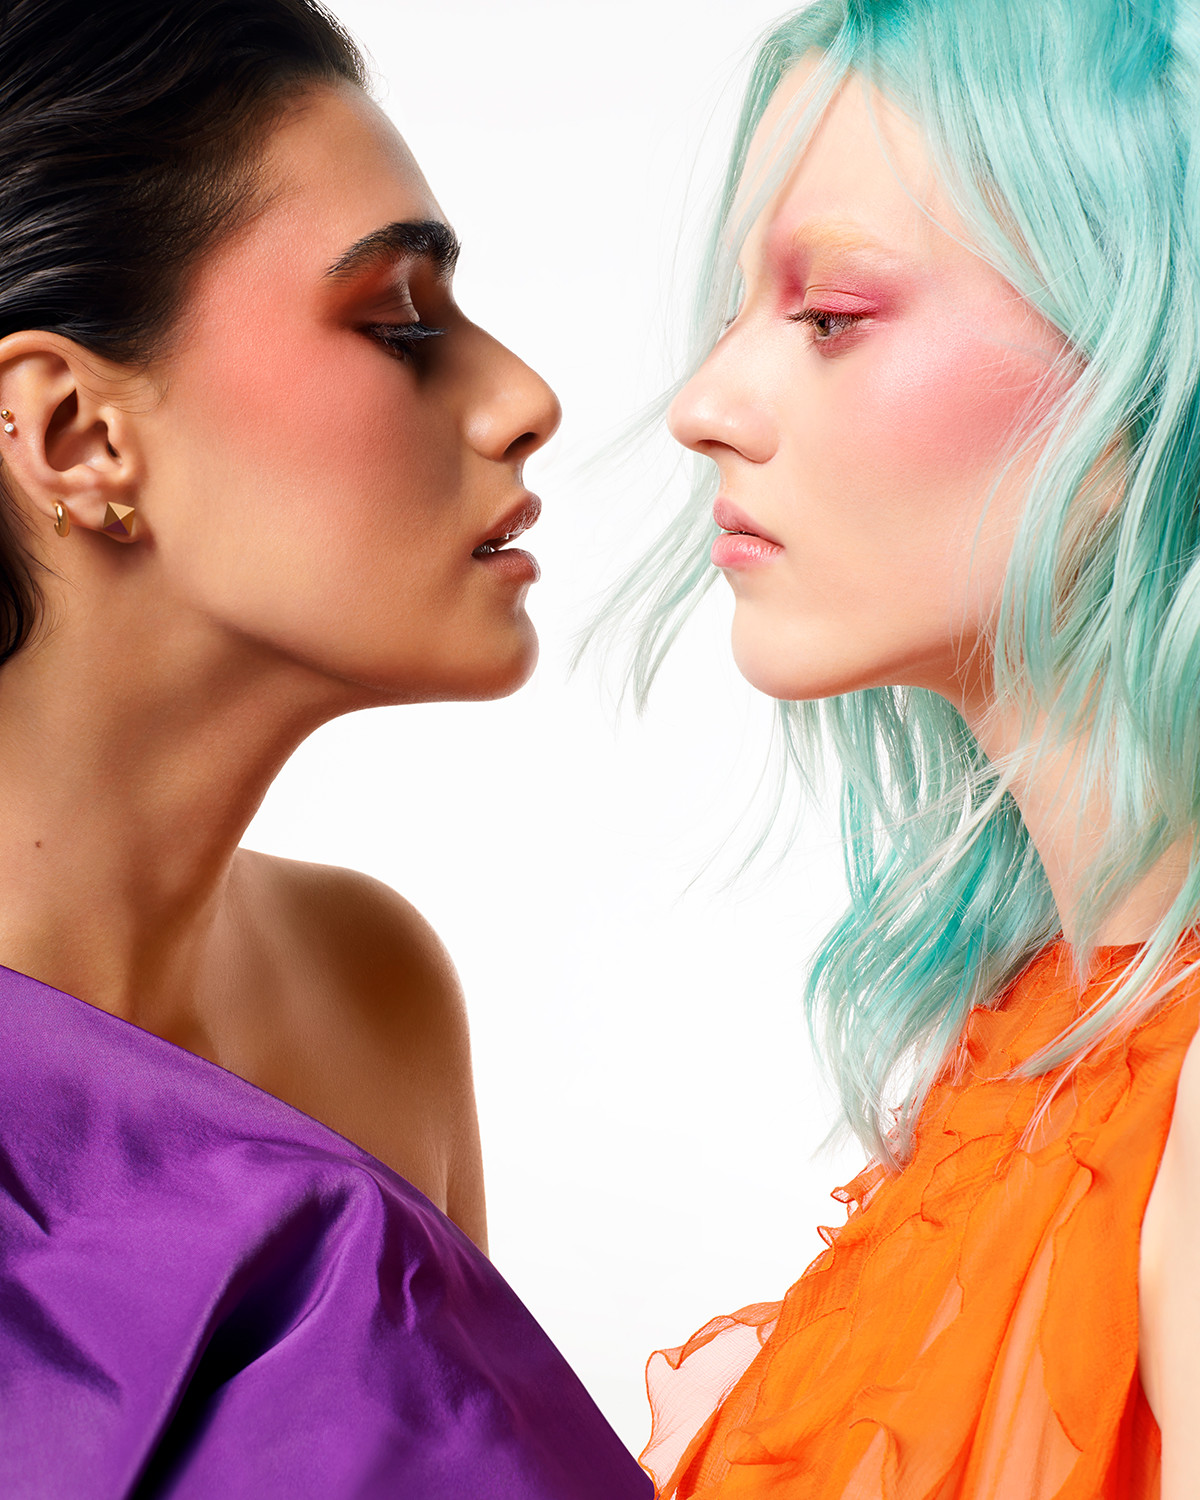 Valentino Couture Makeup Campaign, shot by Pierpaolo Piccioli - © artifices